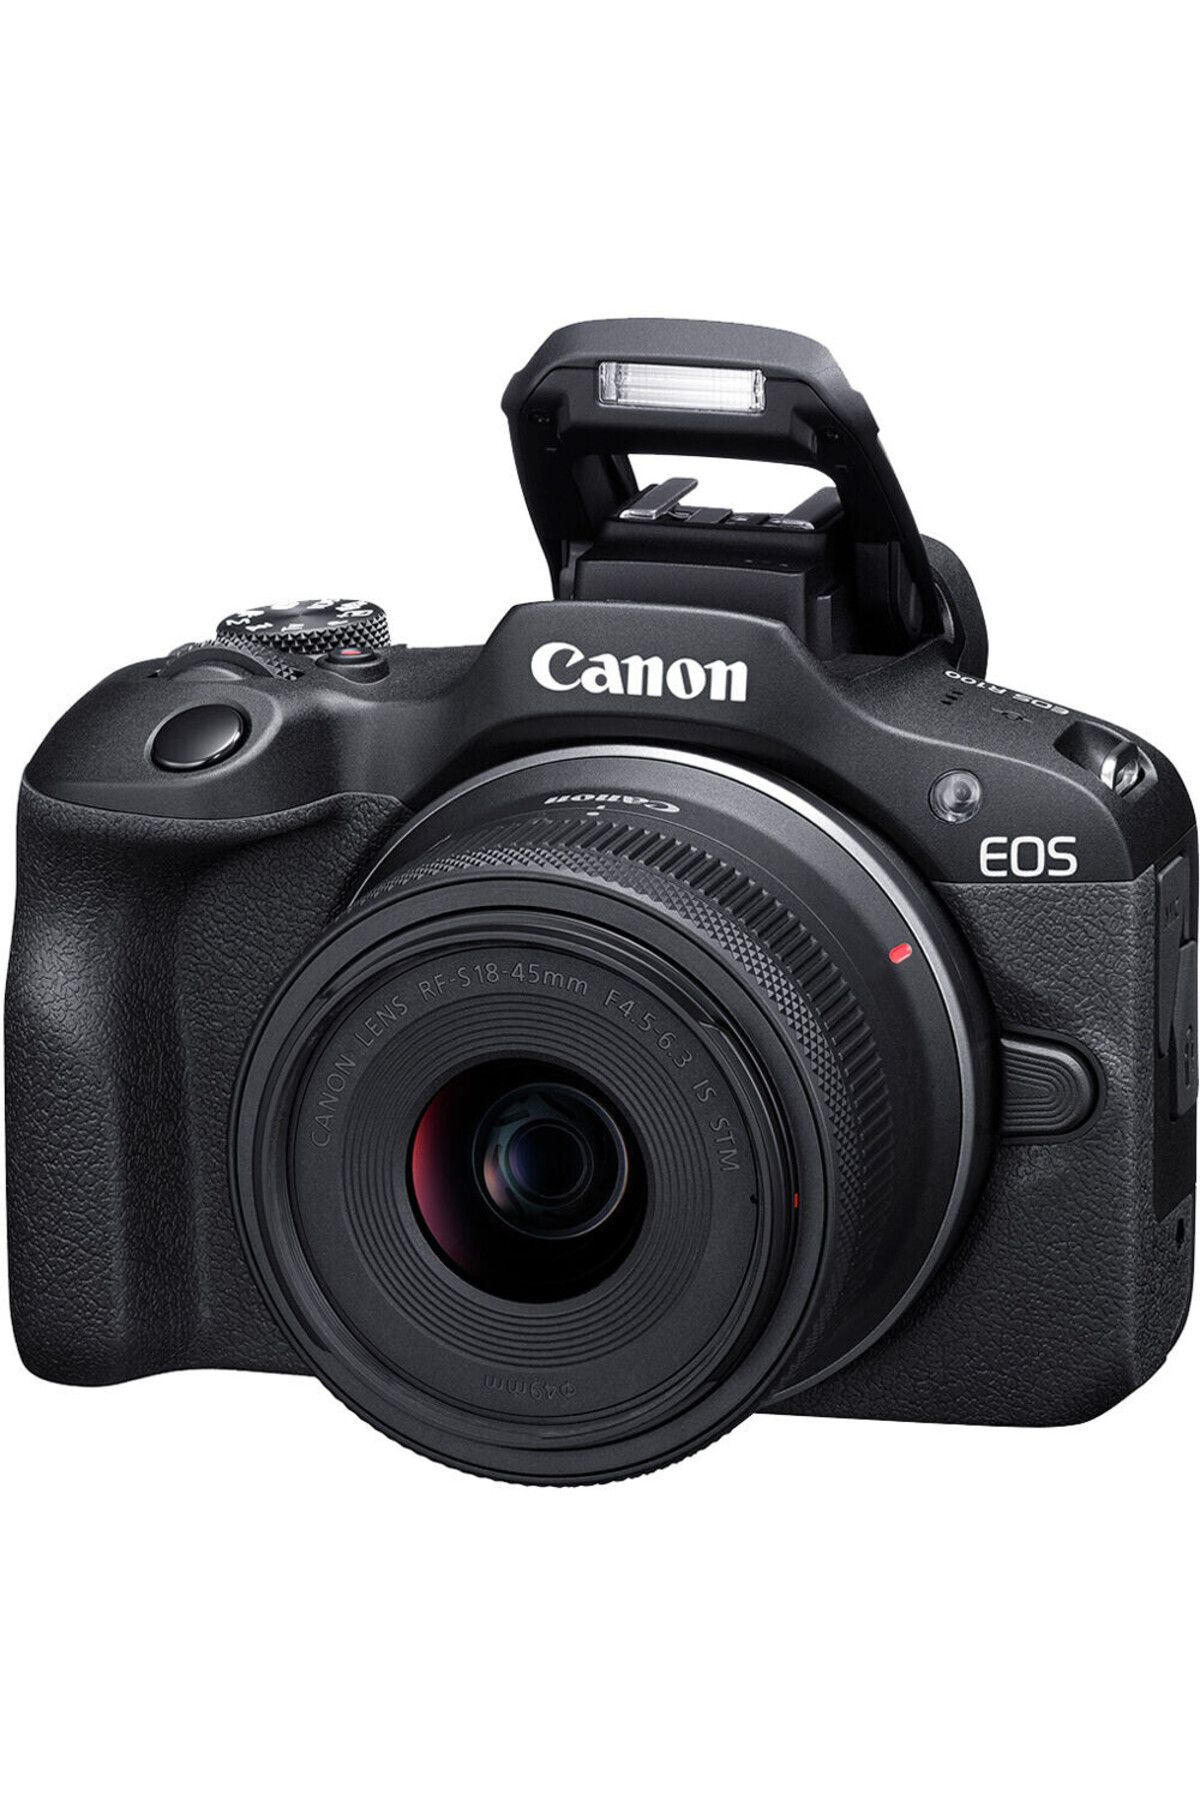 Canon EOS R100 18-45 Lens Kit